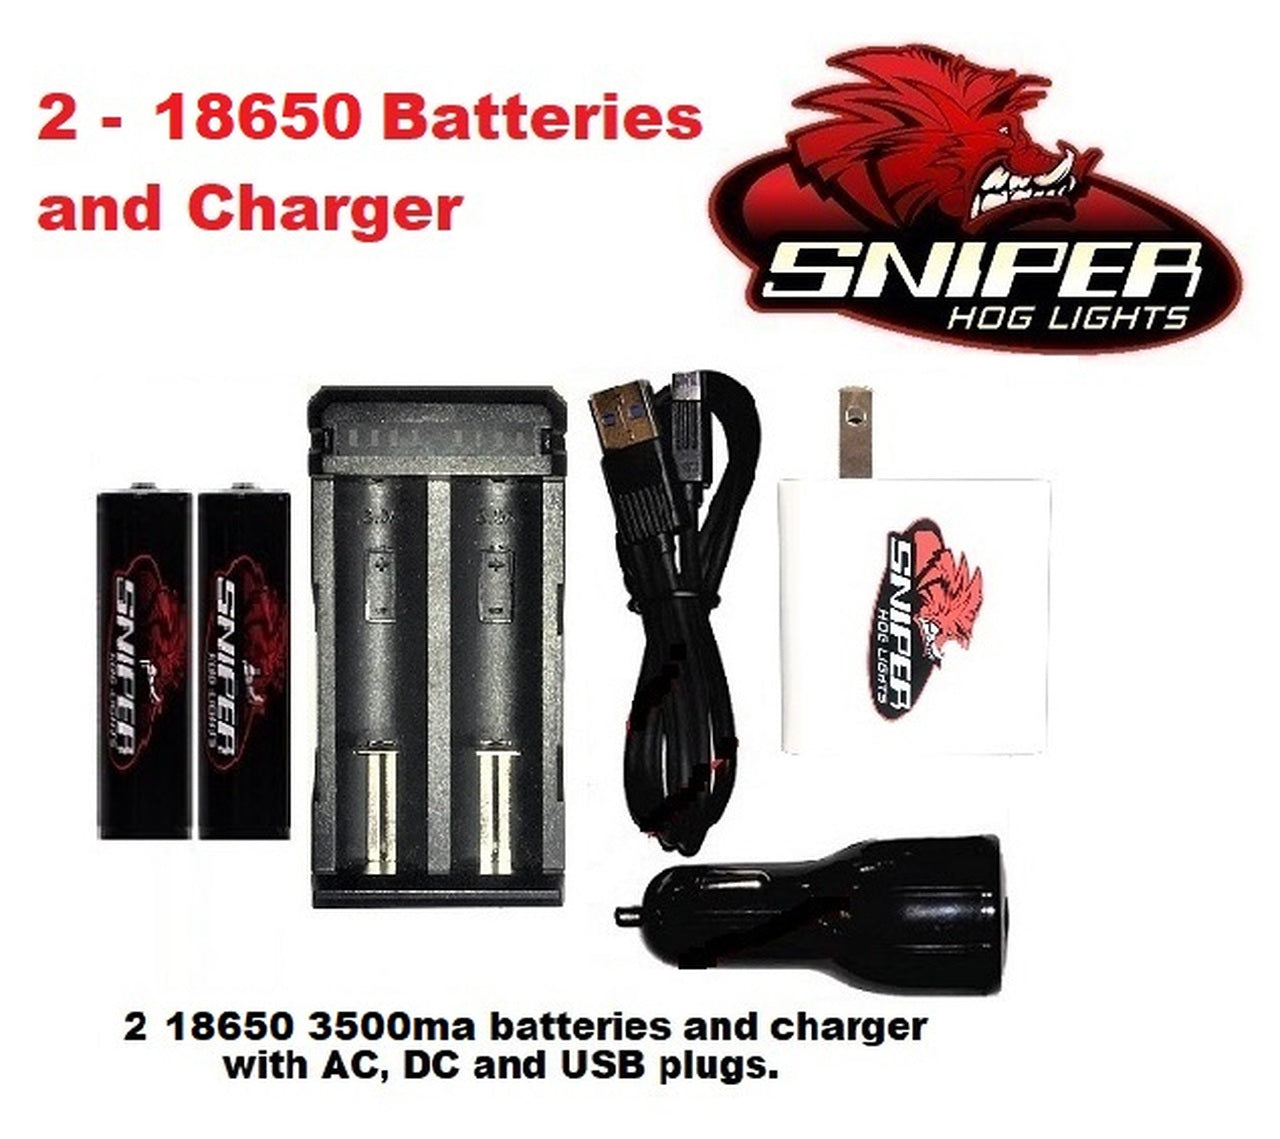 Sniper Hog Lights (2) 18650 batteries and Charger